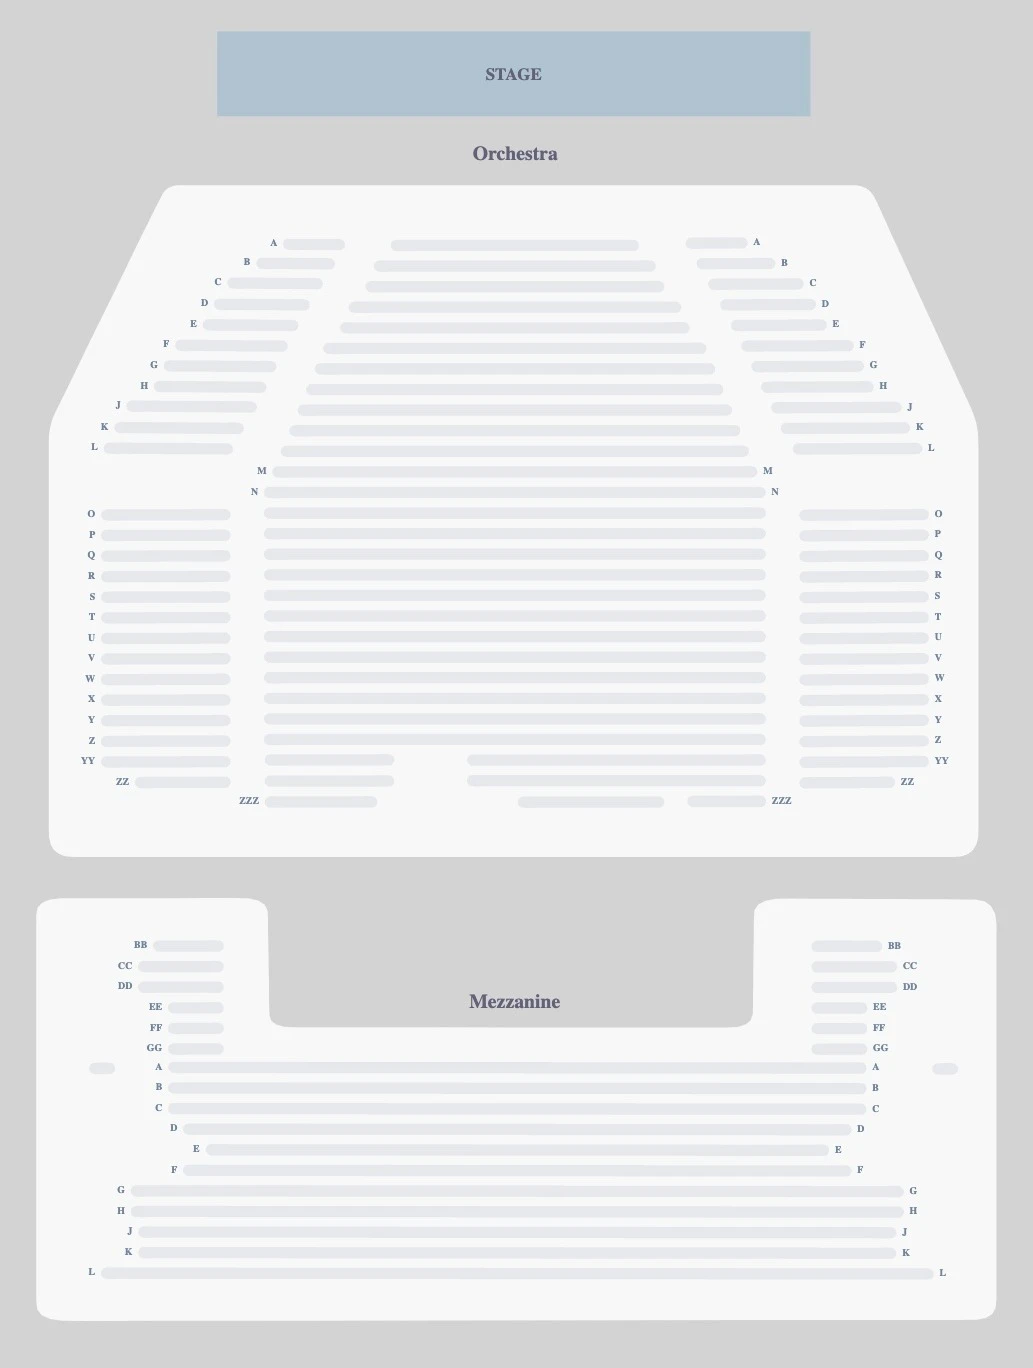 Minskoff Theatre seating plan